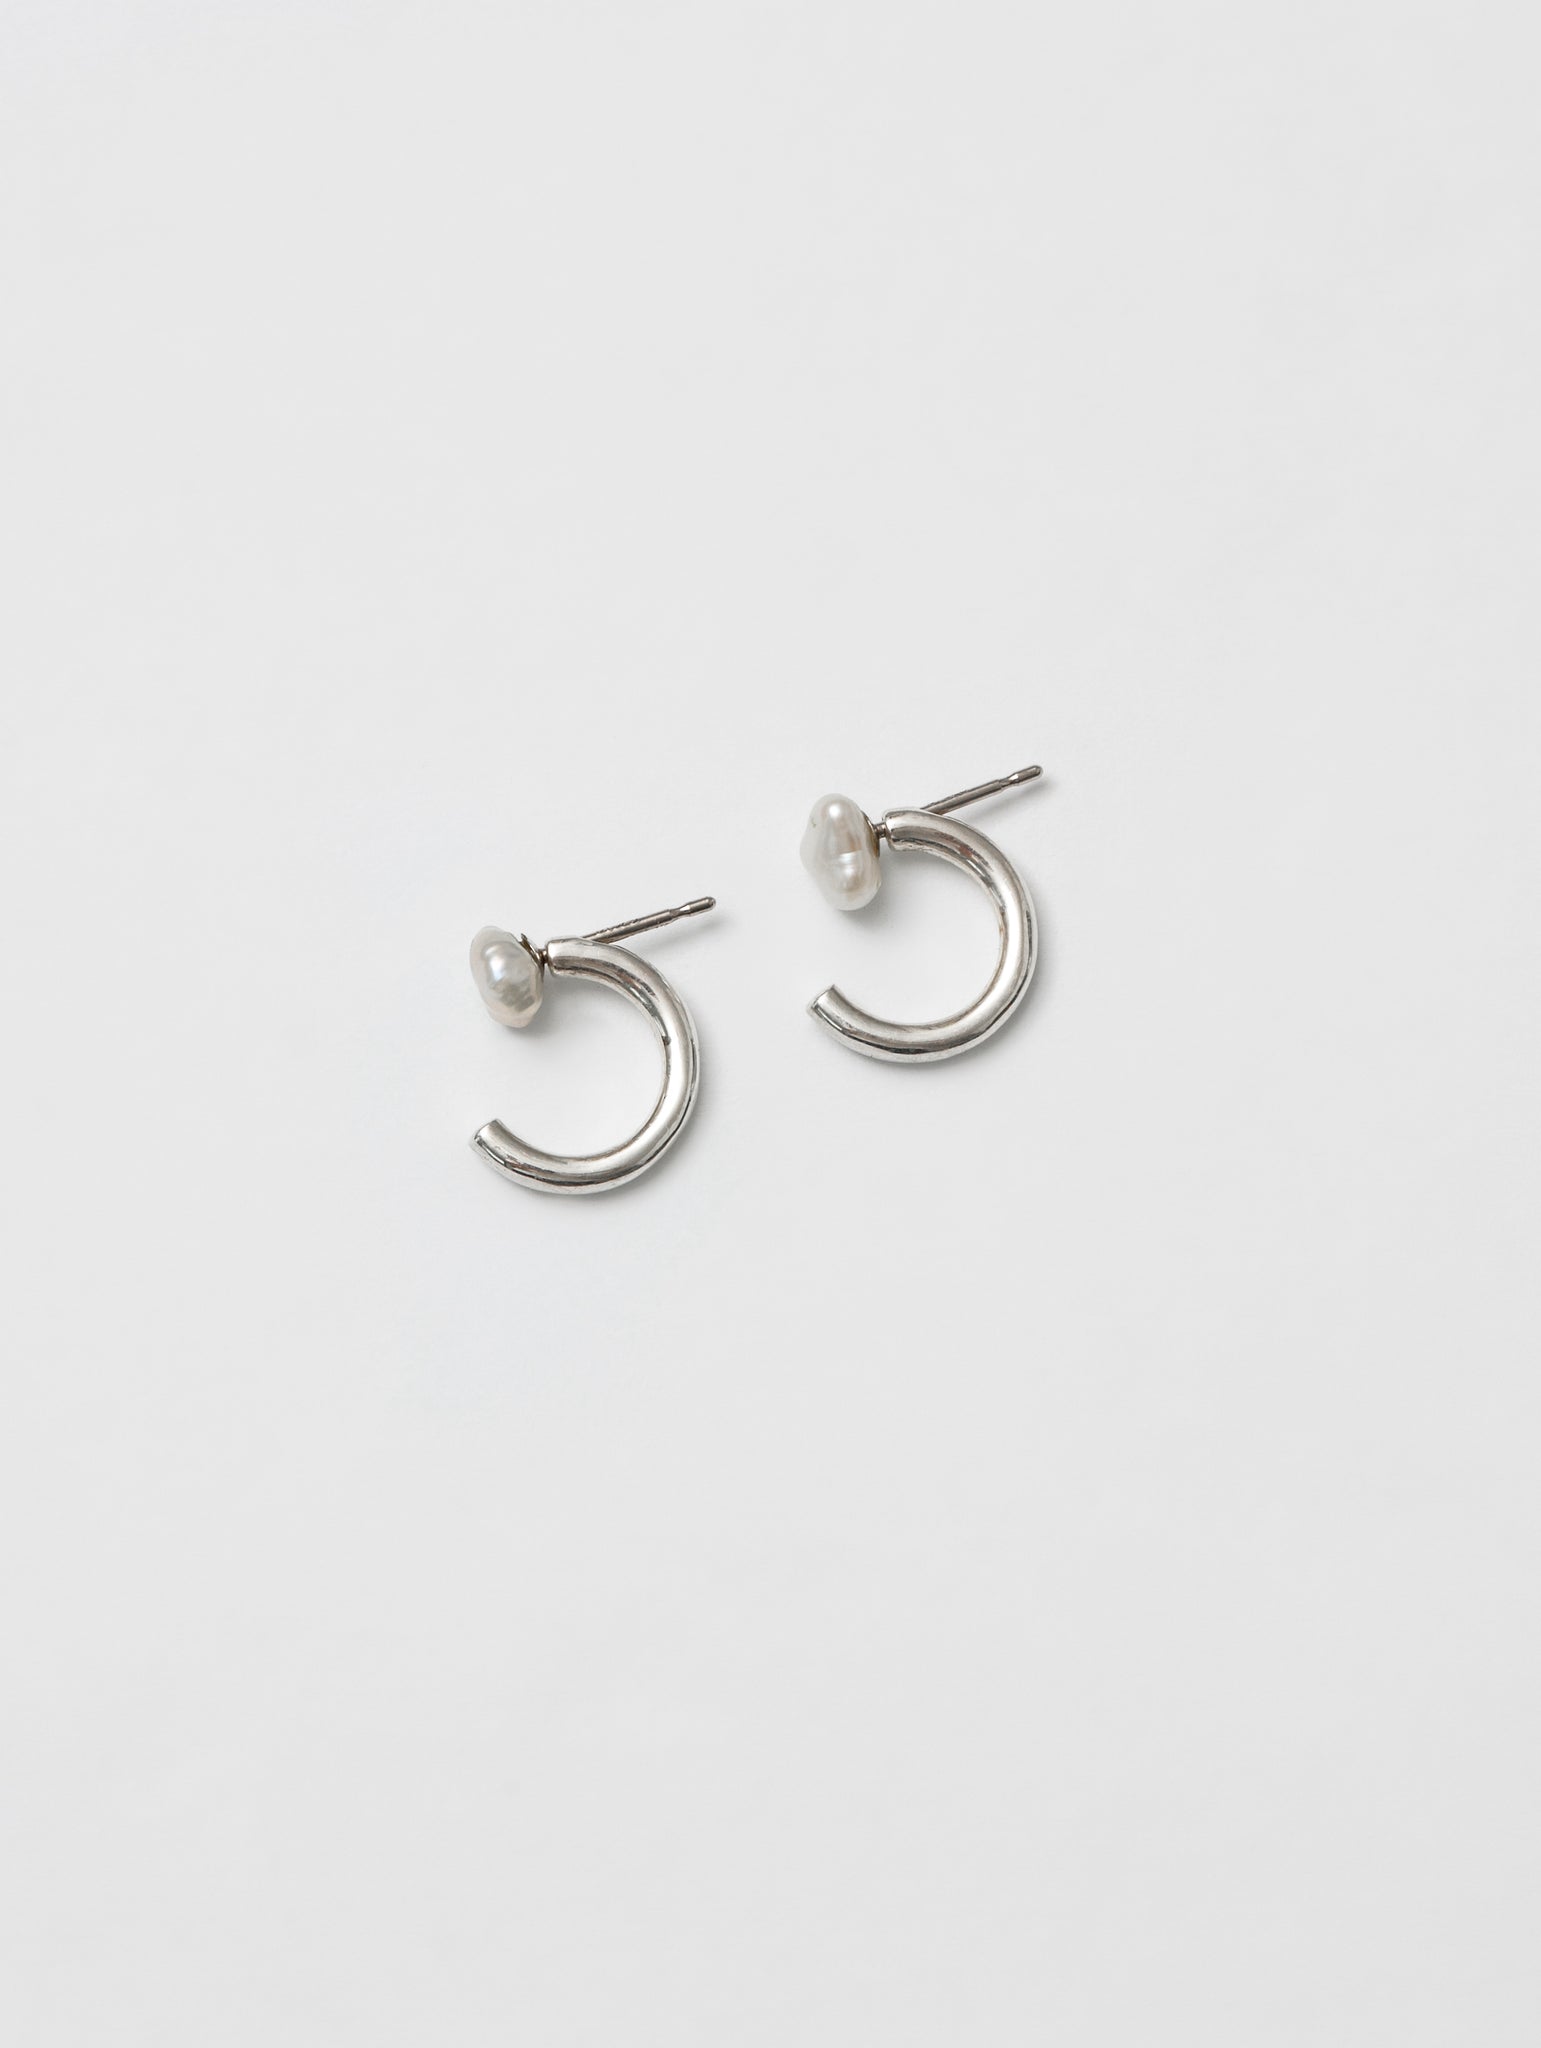 Fraser Earrings in Sterling Silver